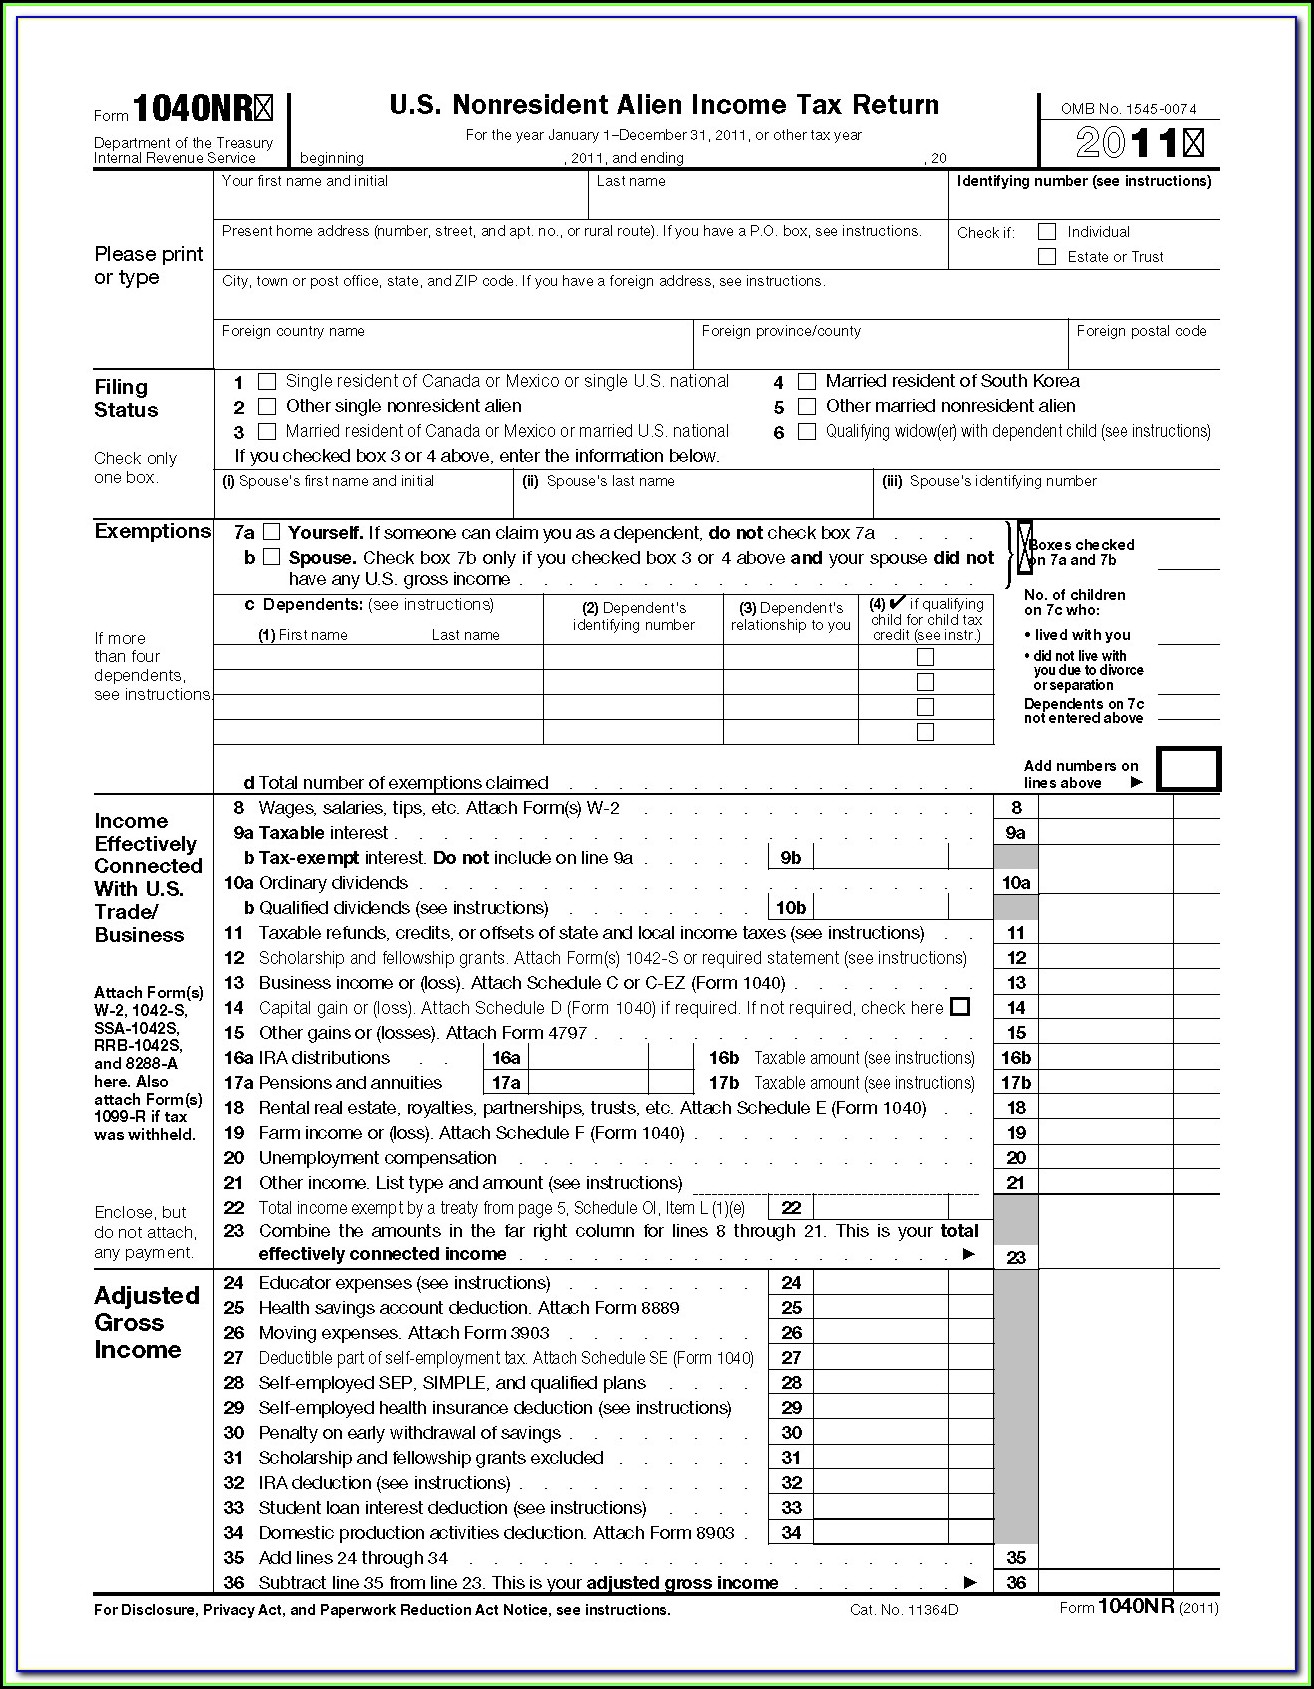 Income Tax Form 1040ez Instructions